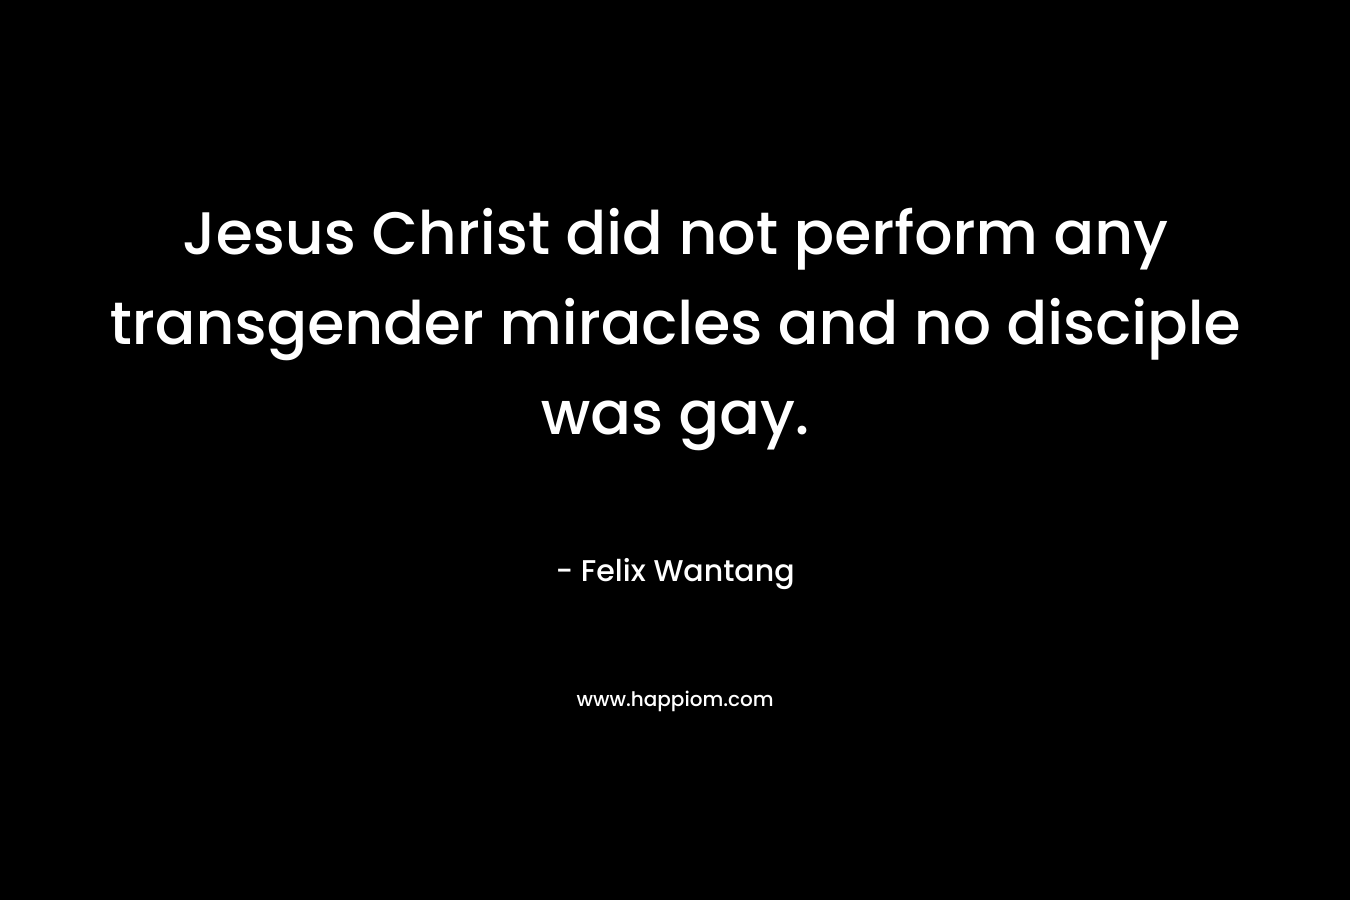 Jesus Christ did not perform any transgender miracles and no disciple was gay. – Felix Wantang